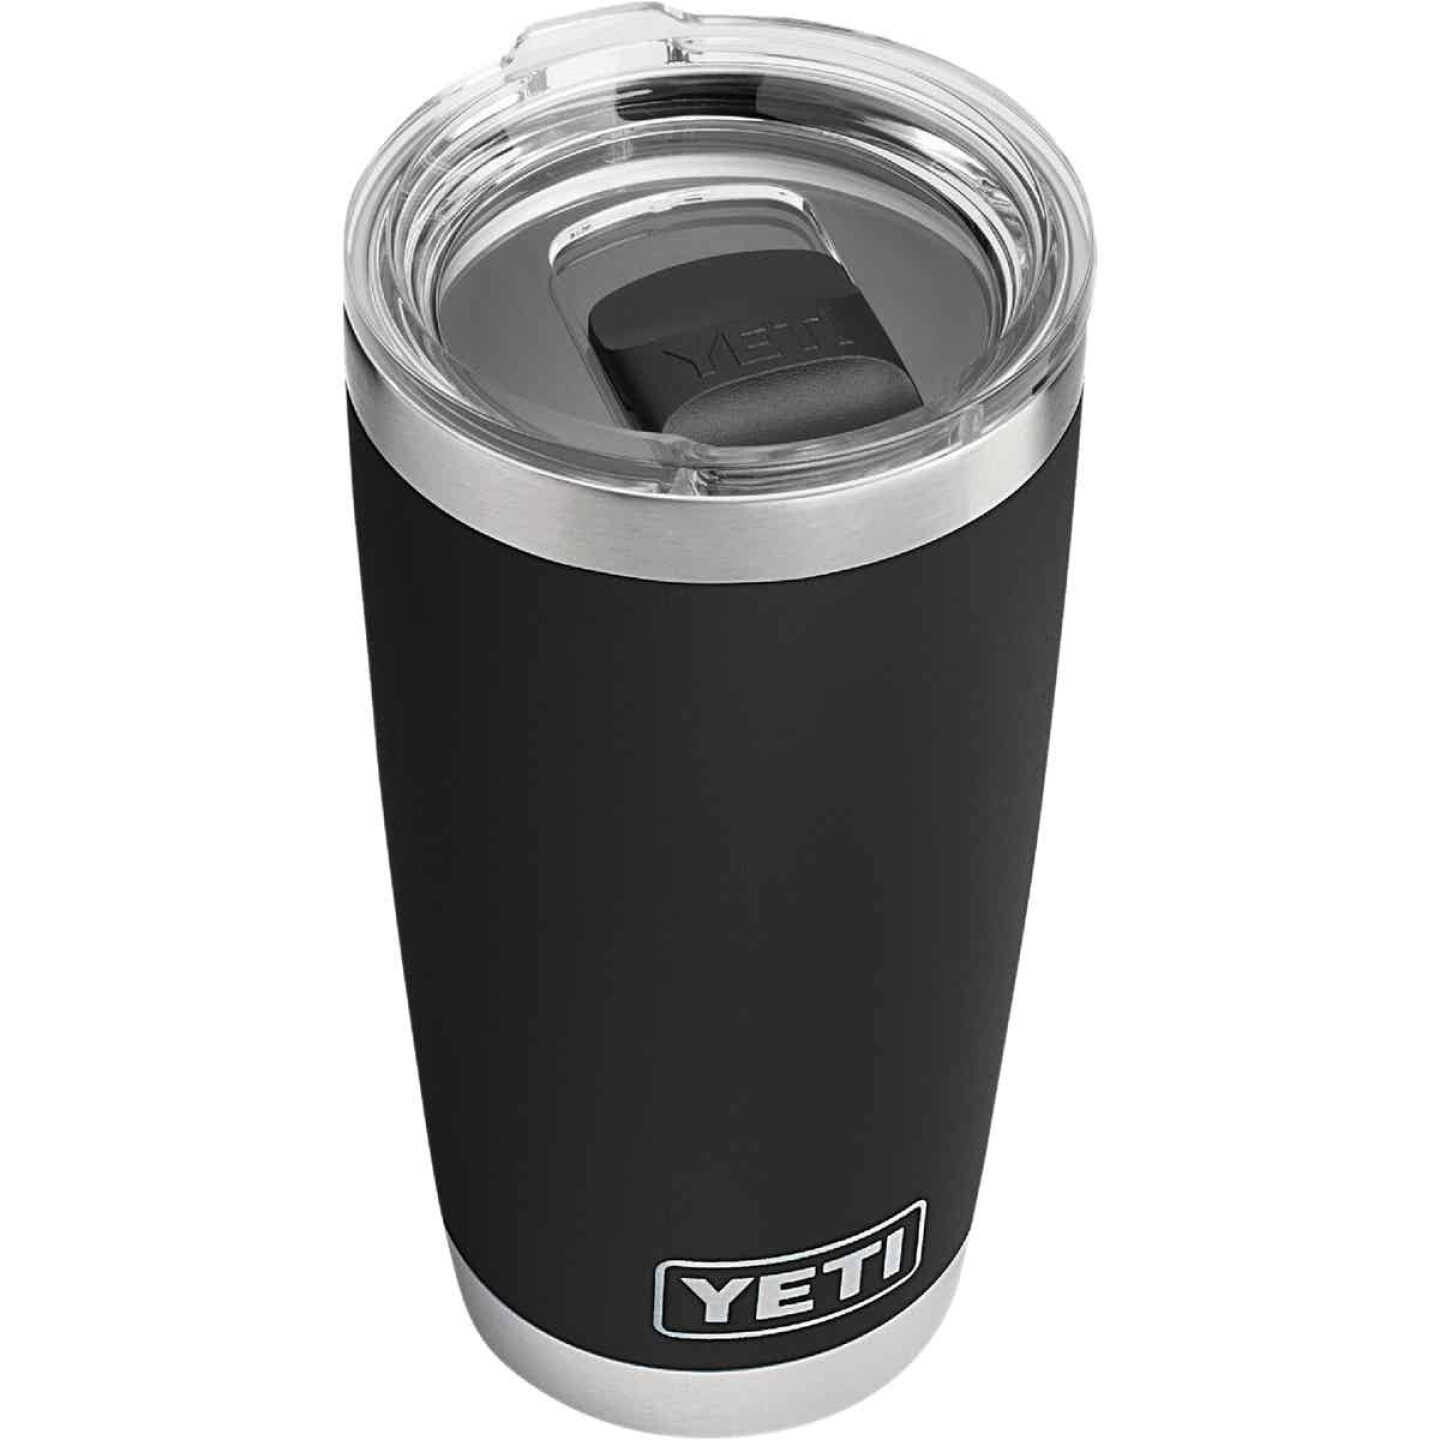 YETI Rambler Mug Review: Durable Build, Mediocre Insulation